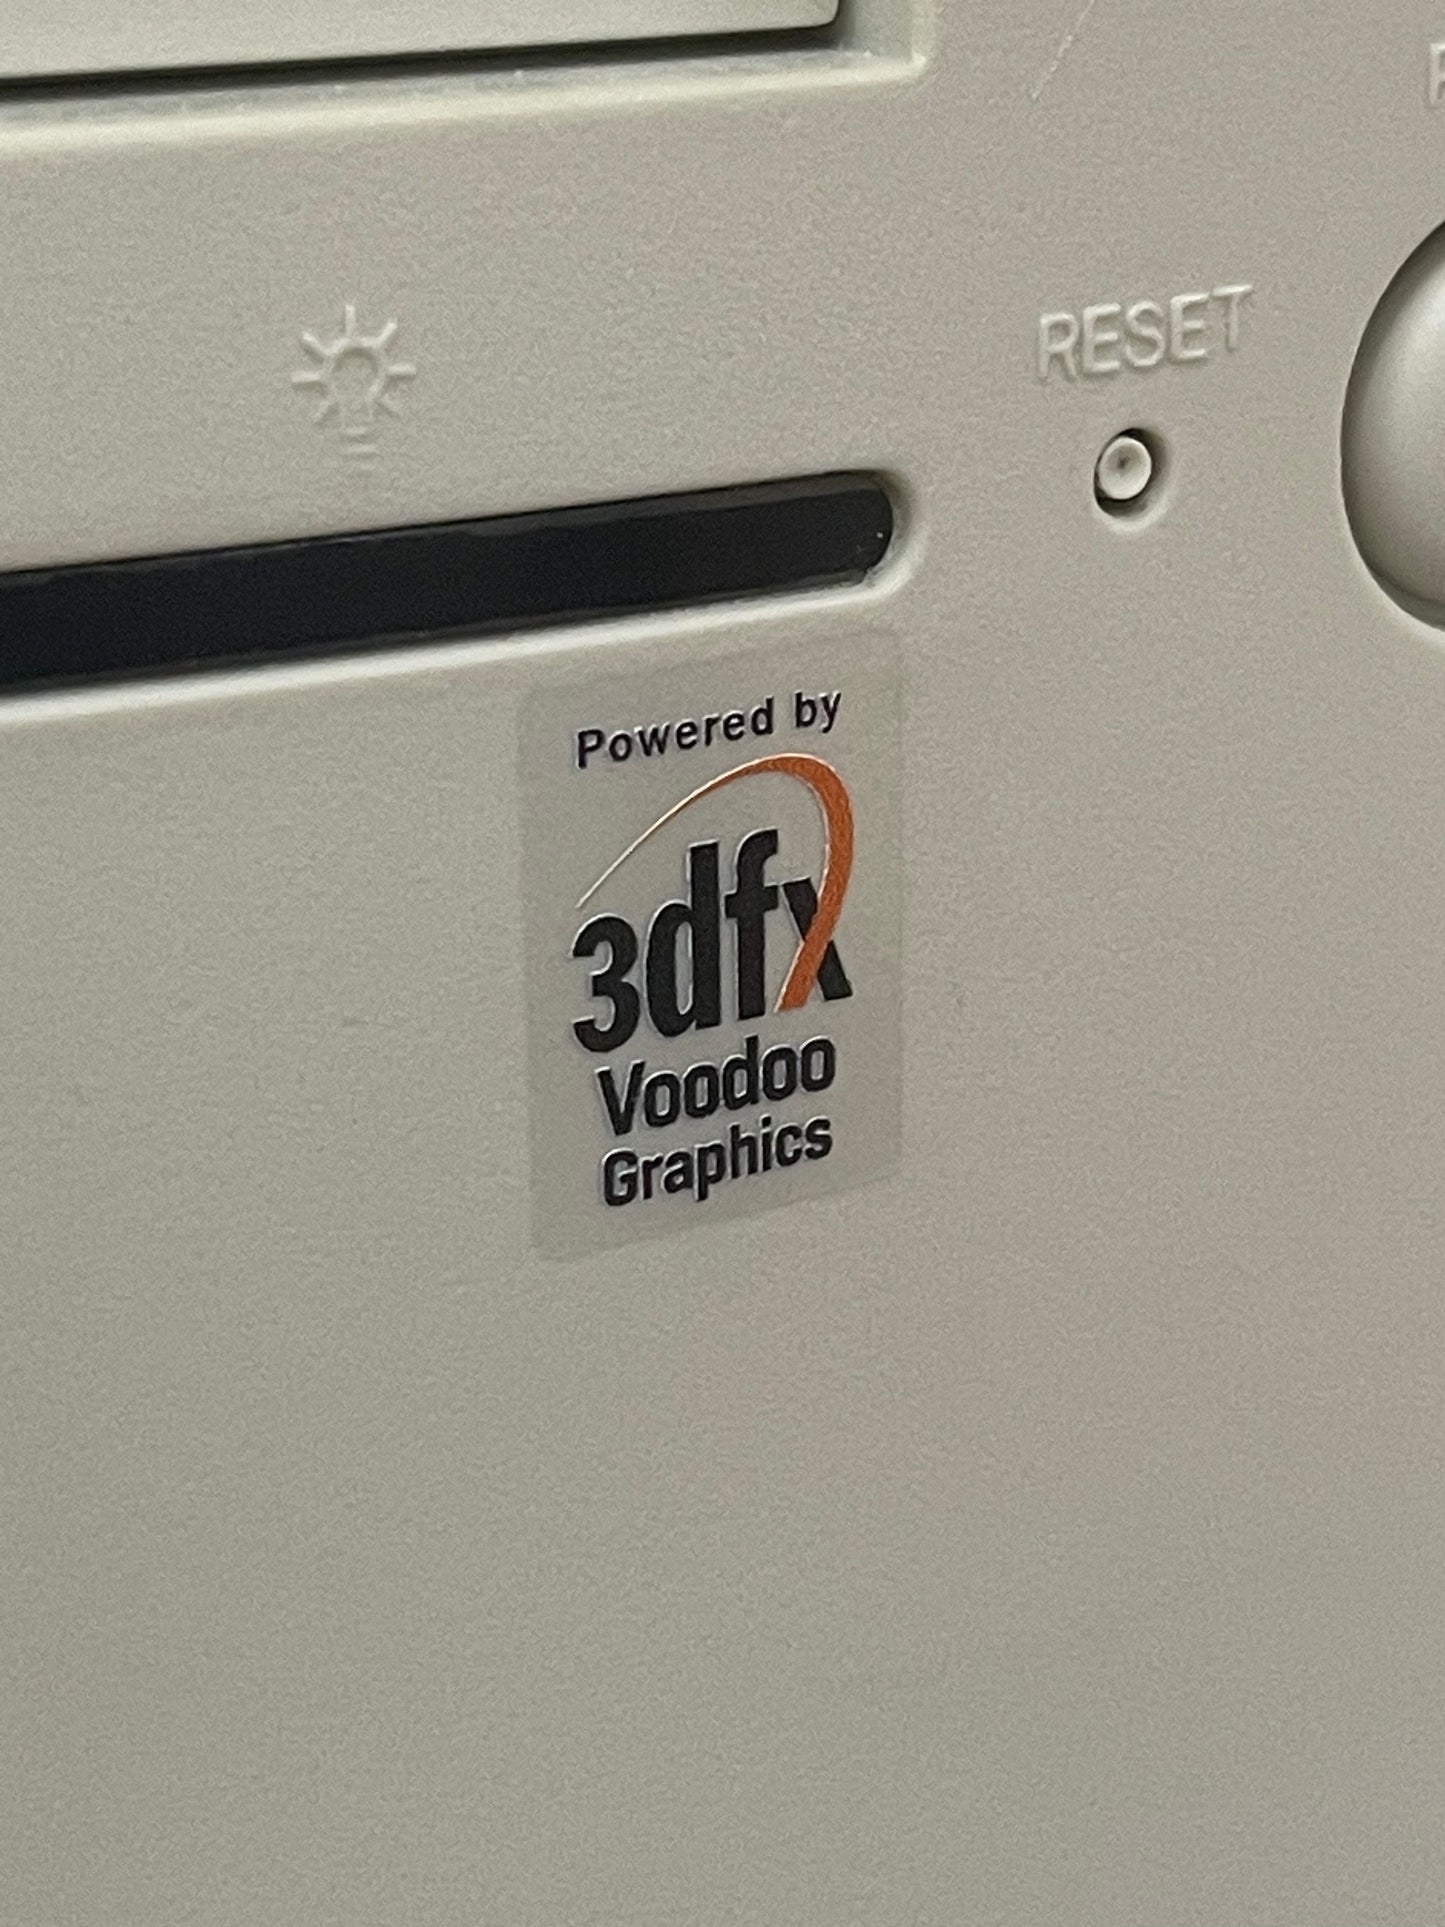 3Dfx Voodoo Graphics Case Badge Sticker - Clear